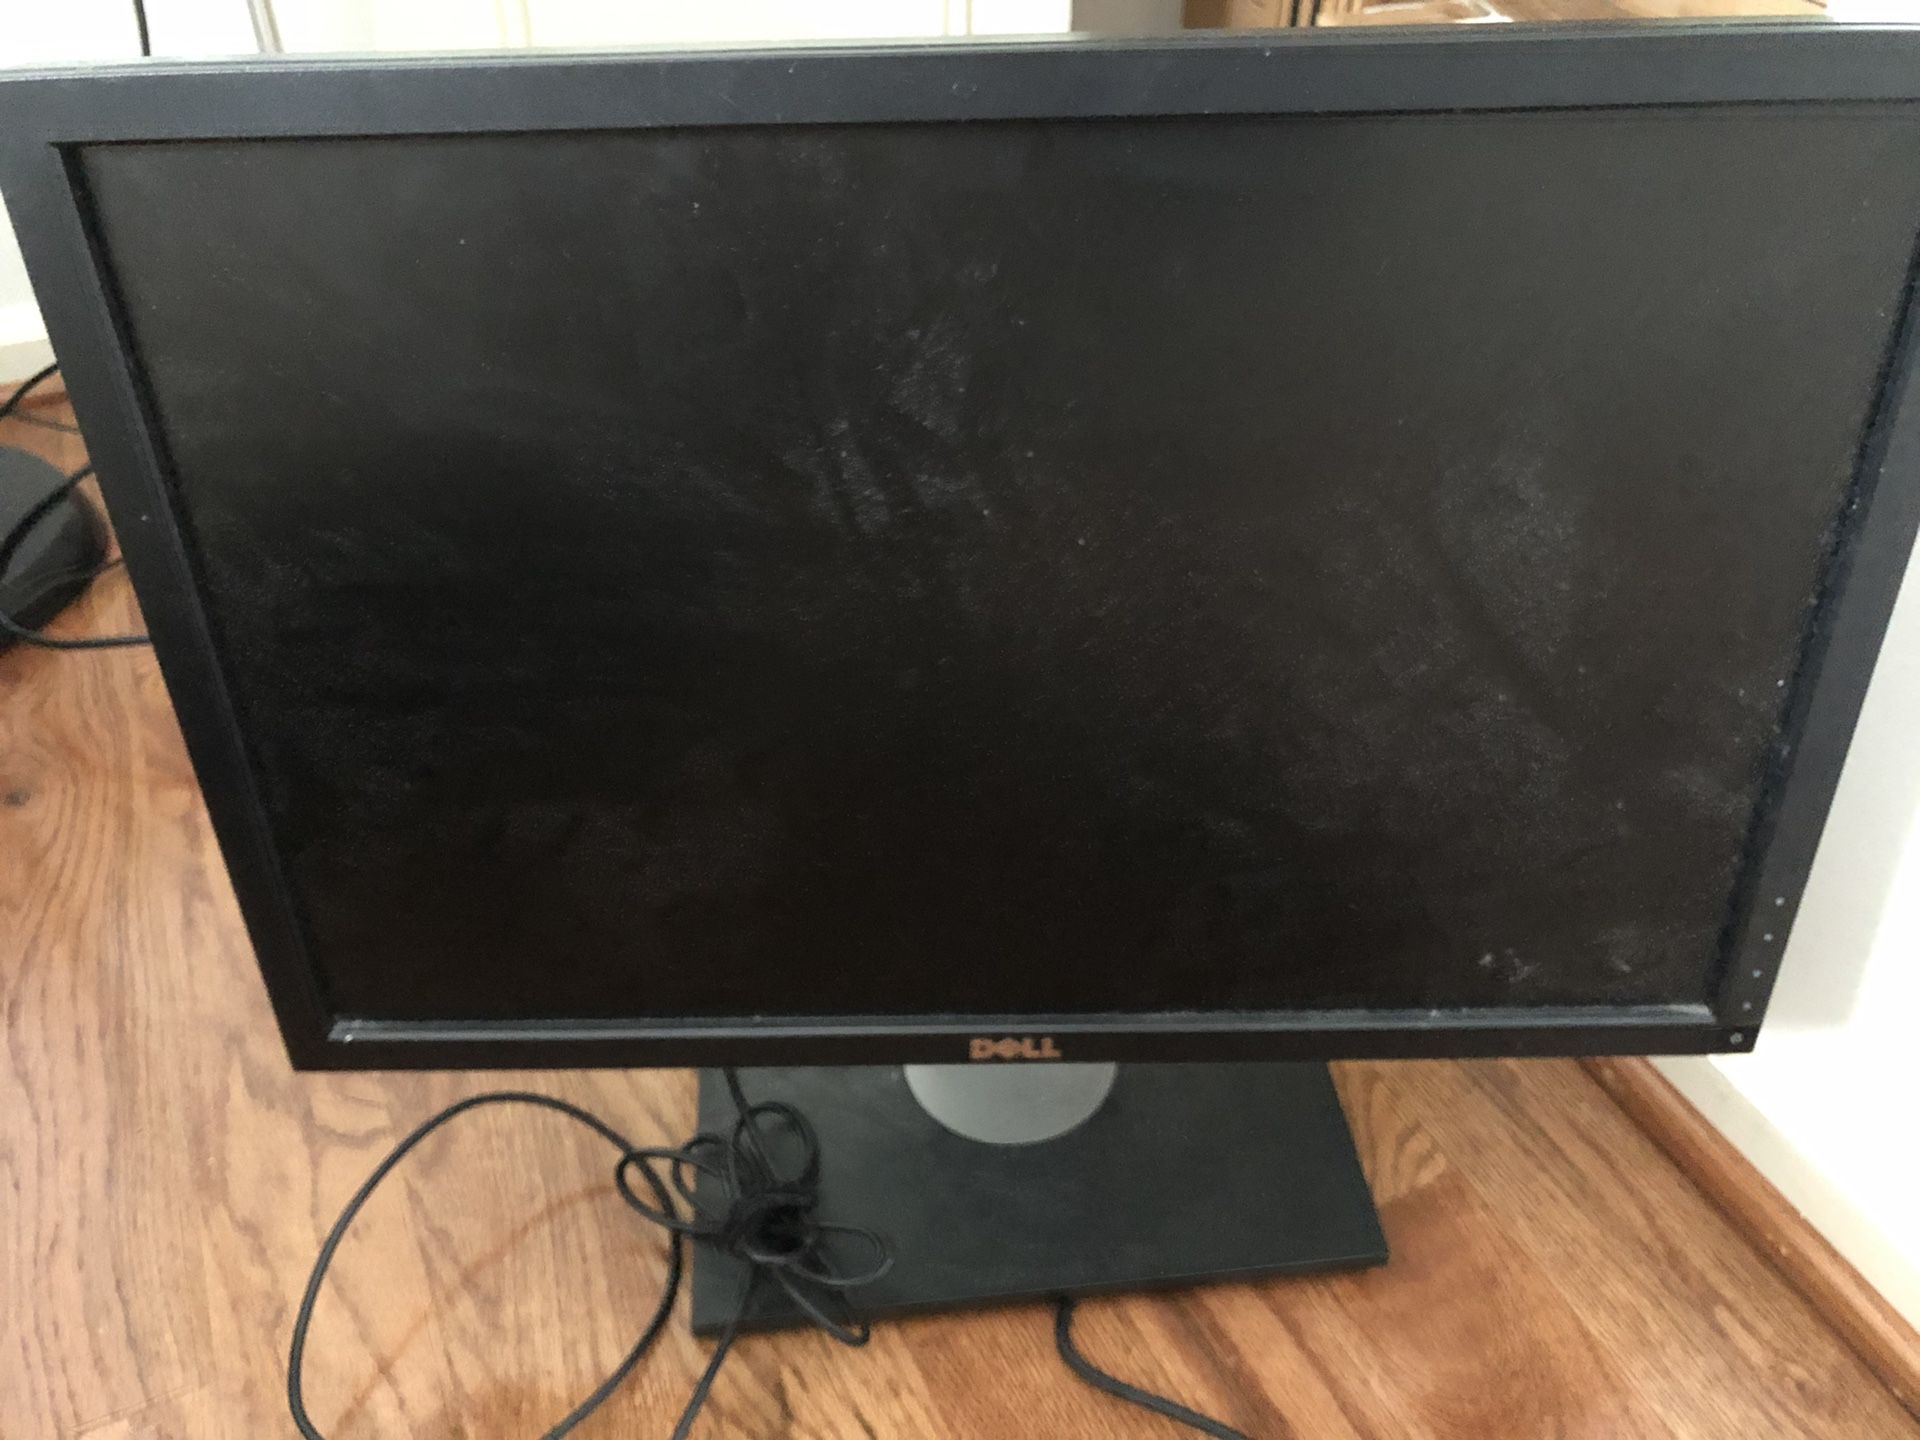 Dell Professional 22-inch widescreen monitor-great condition